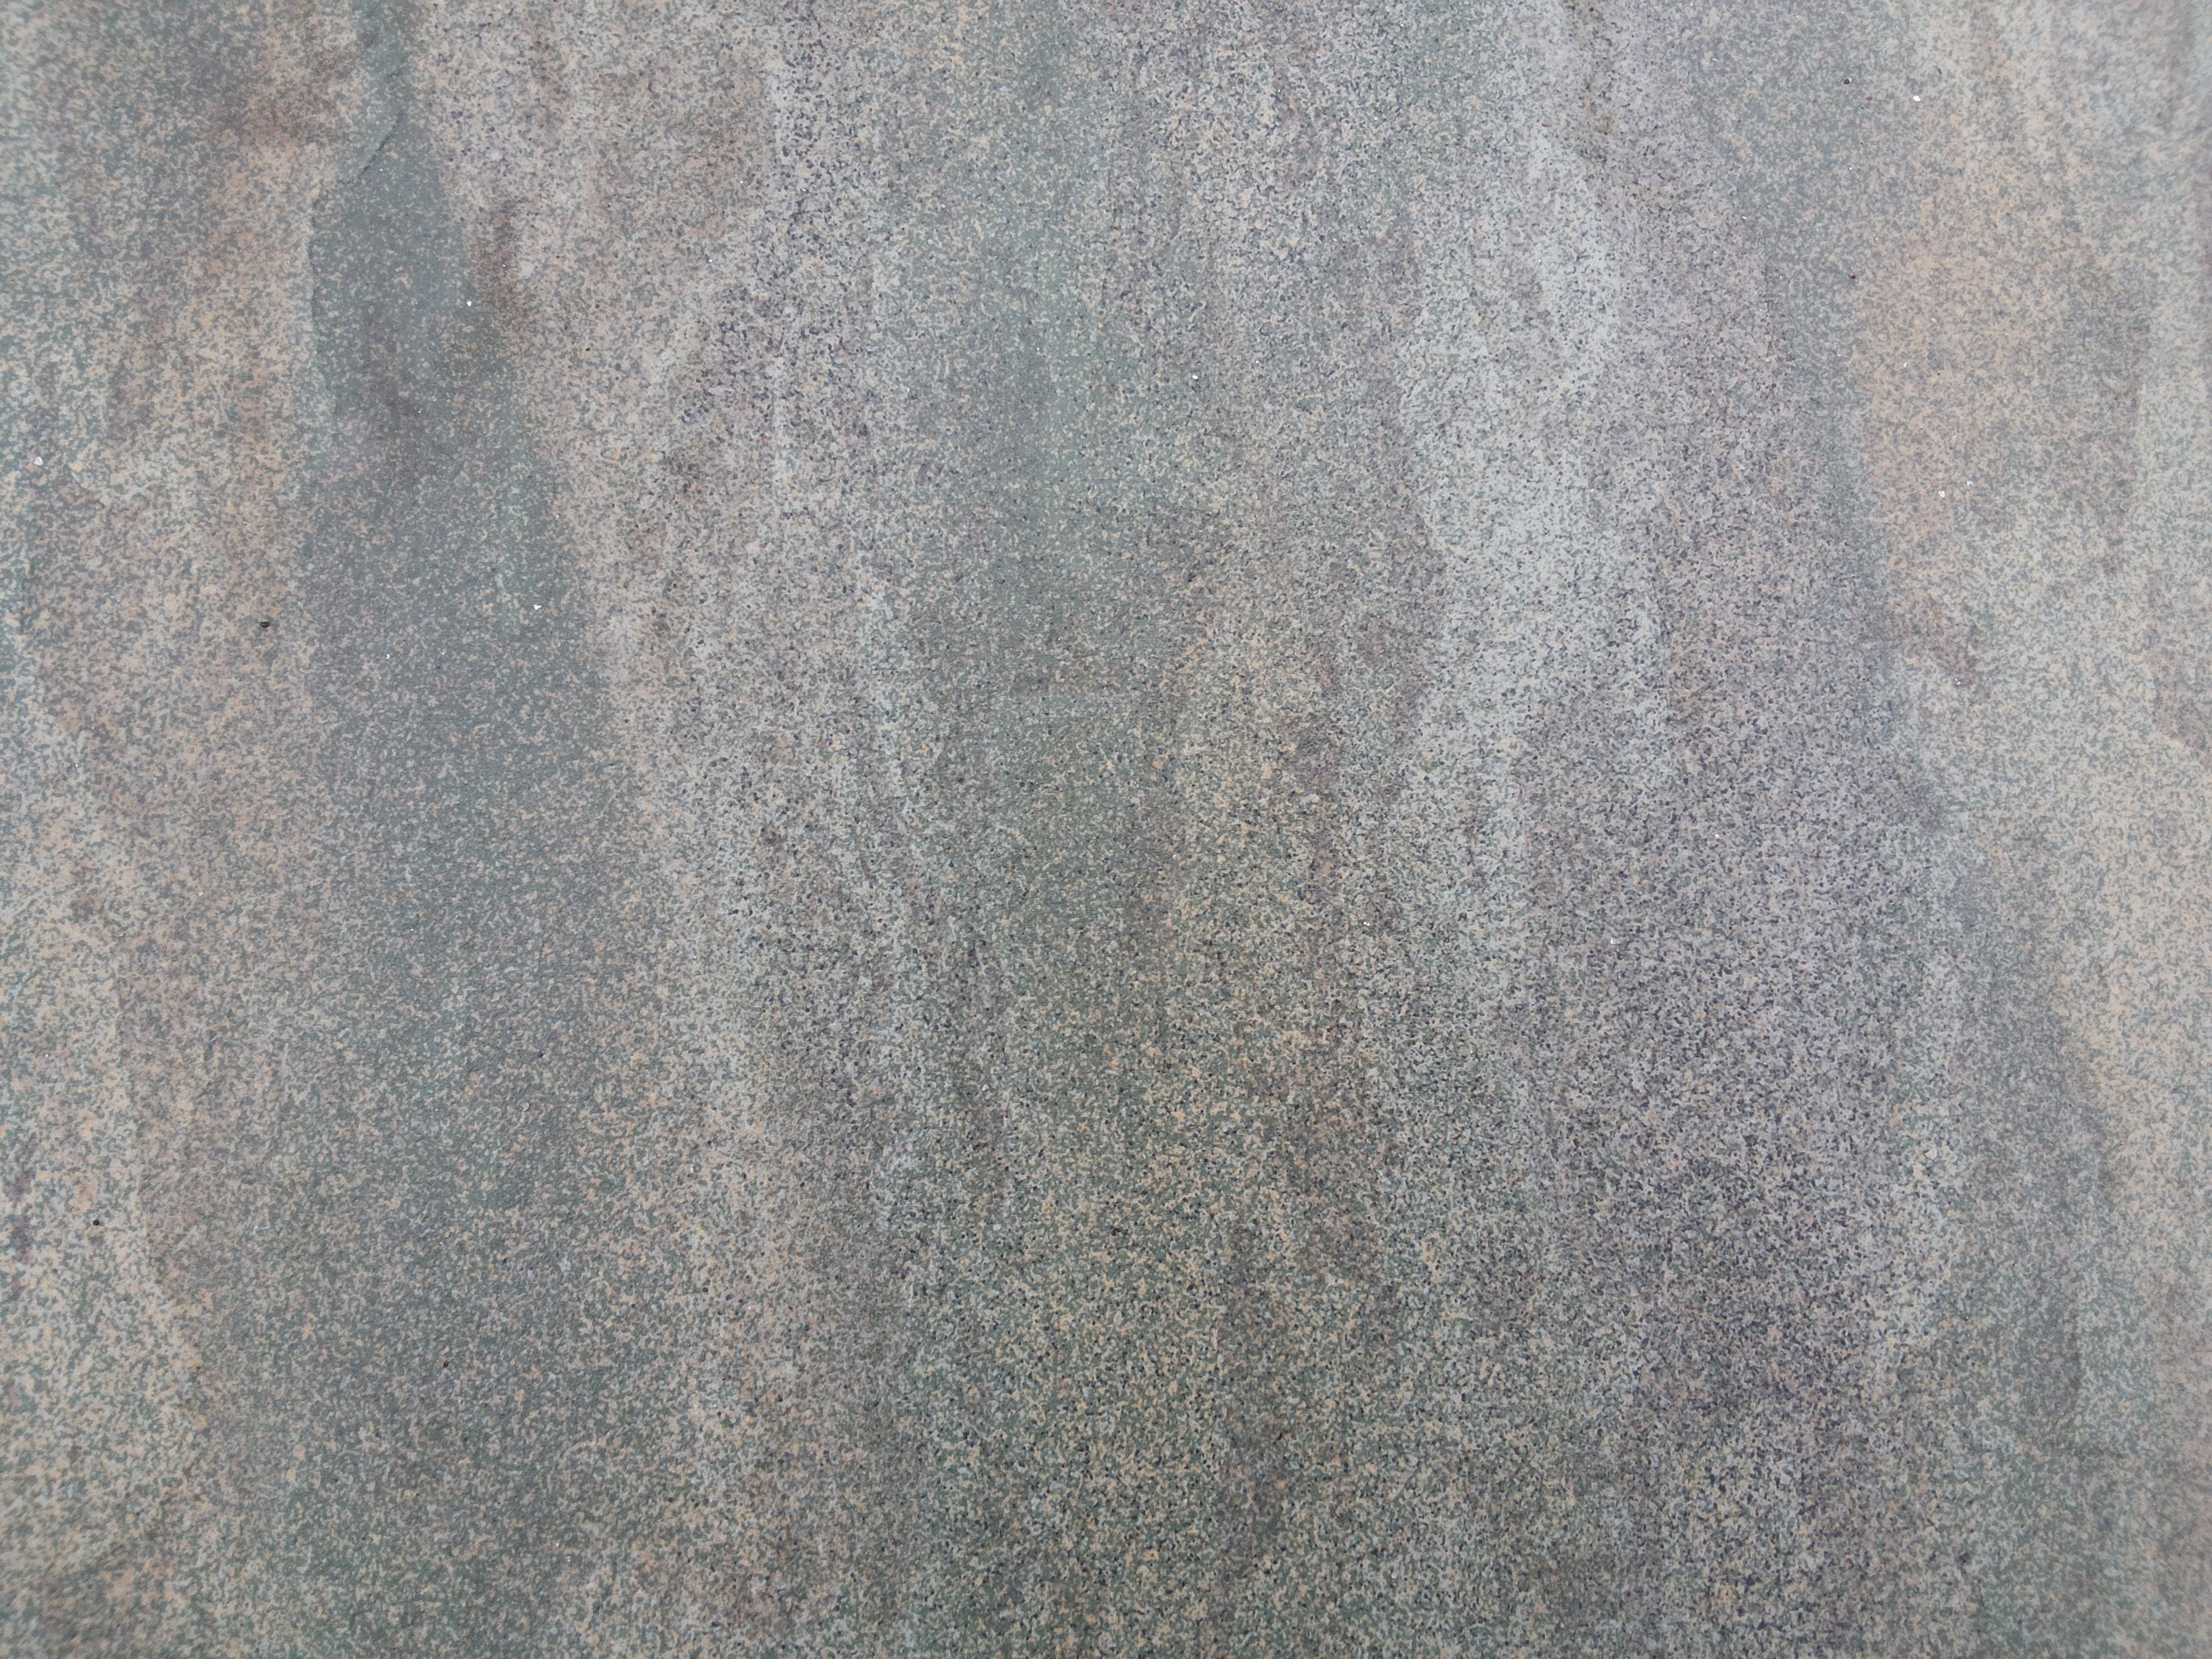 File:Luxury Limestone Texture.jpg - Wikimedia Commons